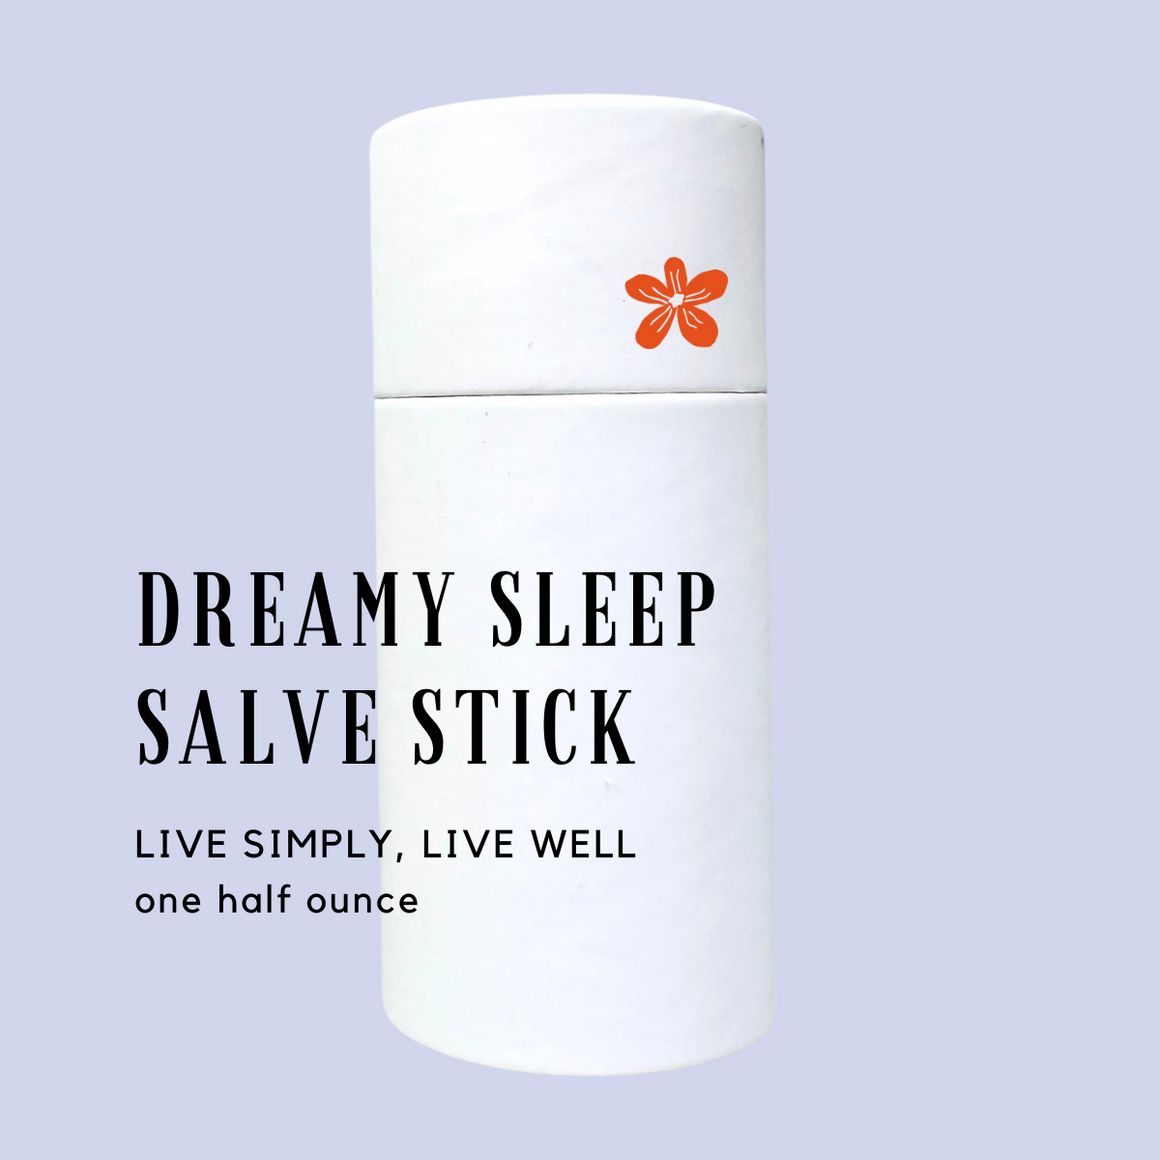 Dreamy Sleep Salve Stick